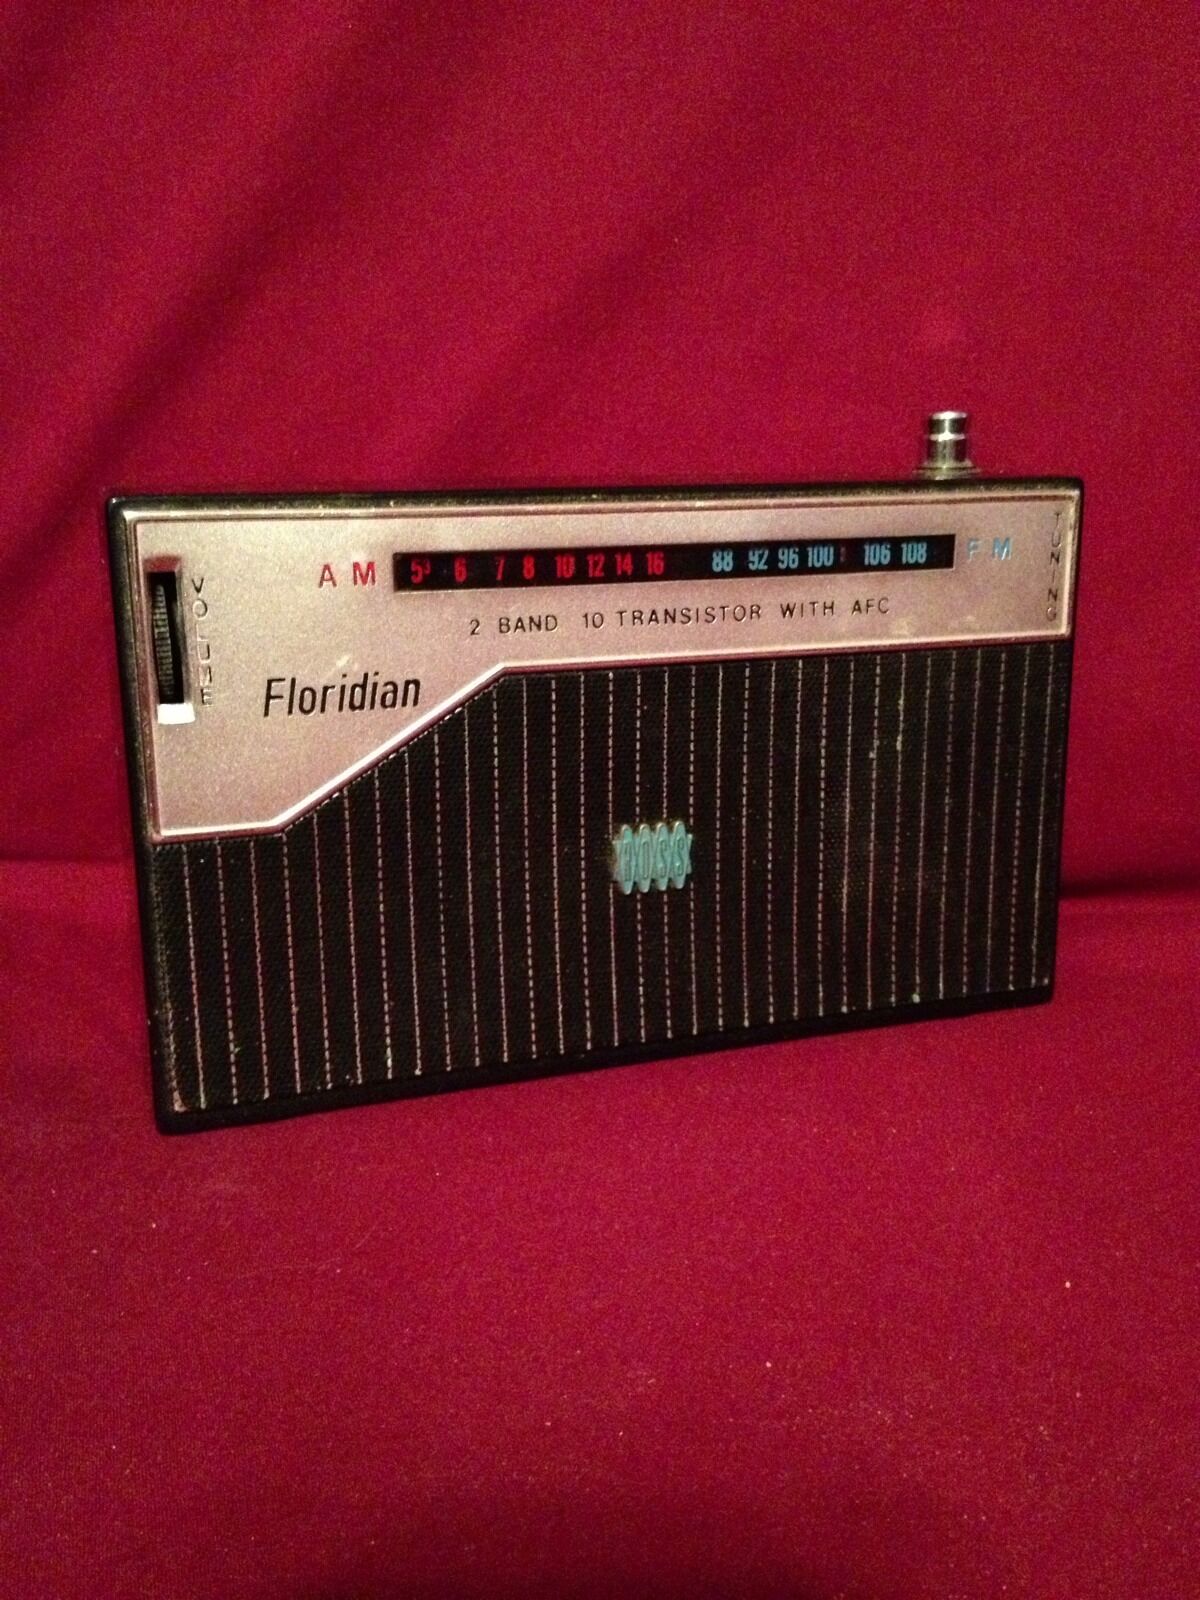 Vintage Transistor Radio Ross AM FM 10 Transistor W/ AFC Floridian Radio Japan